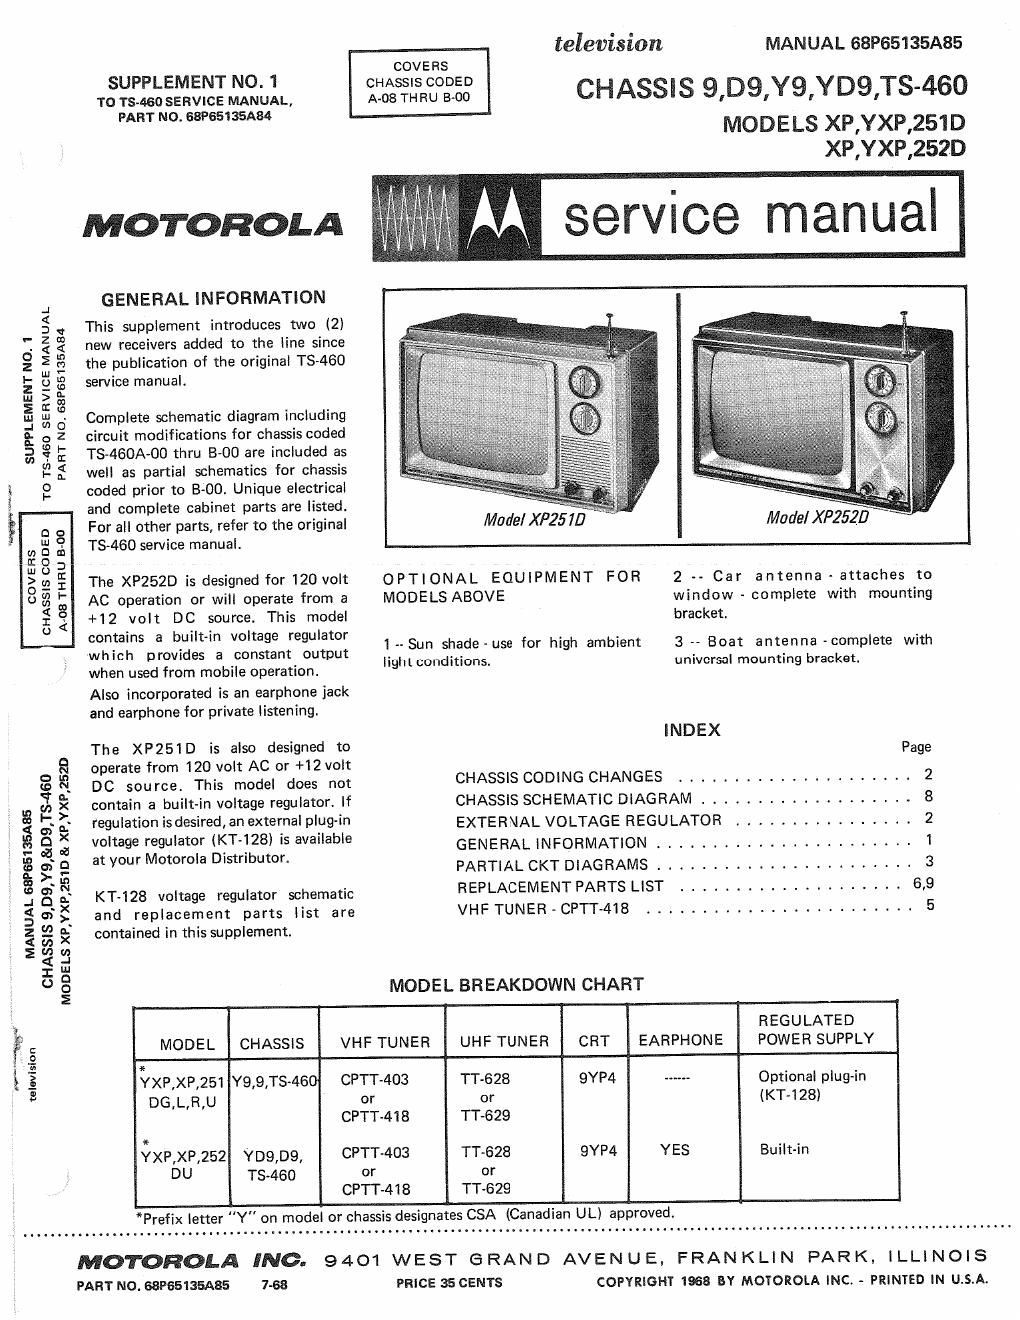 motorola xp 251 d service manual